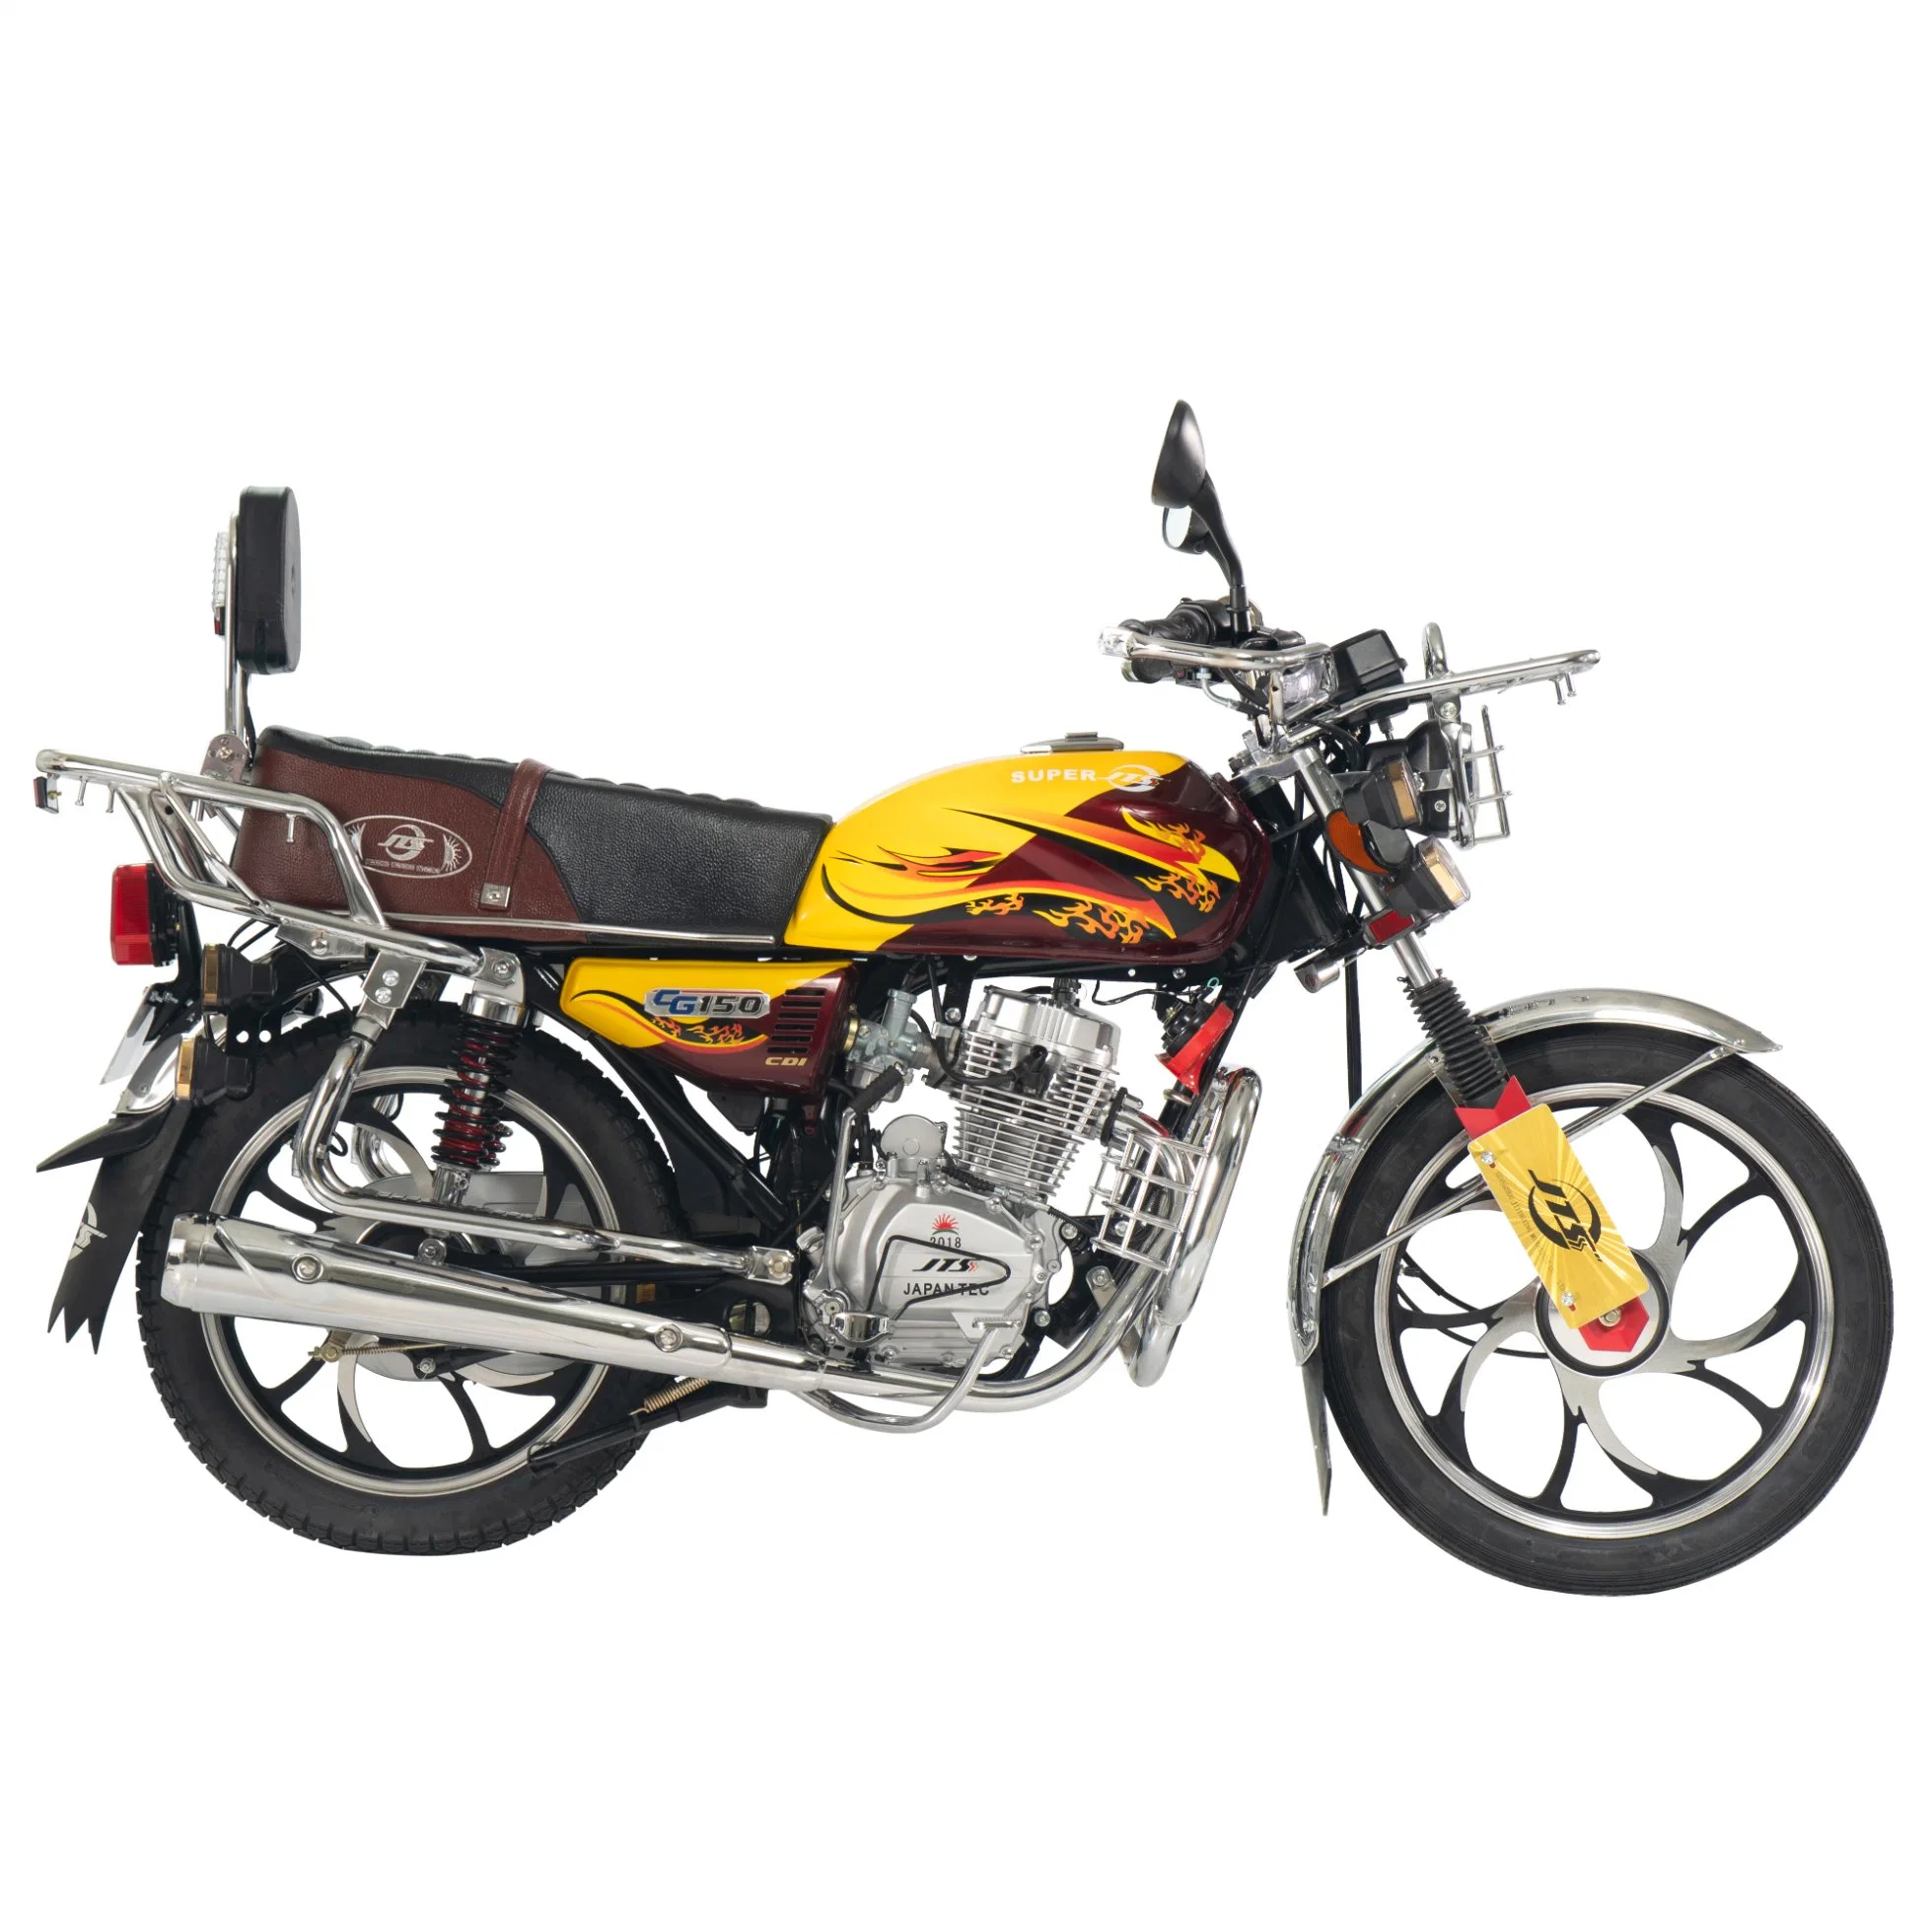 Tigre Cg 150cc Moto / 250cc Dirt Bike / Sport Motorcycle /Electric Vehicle